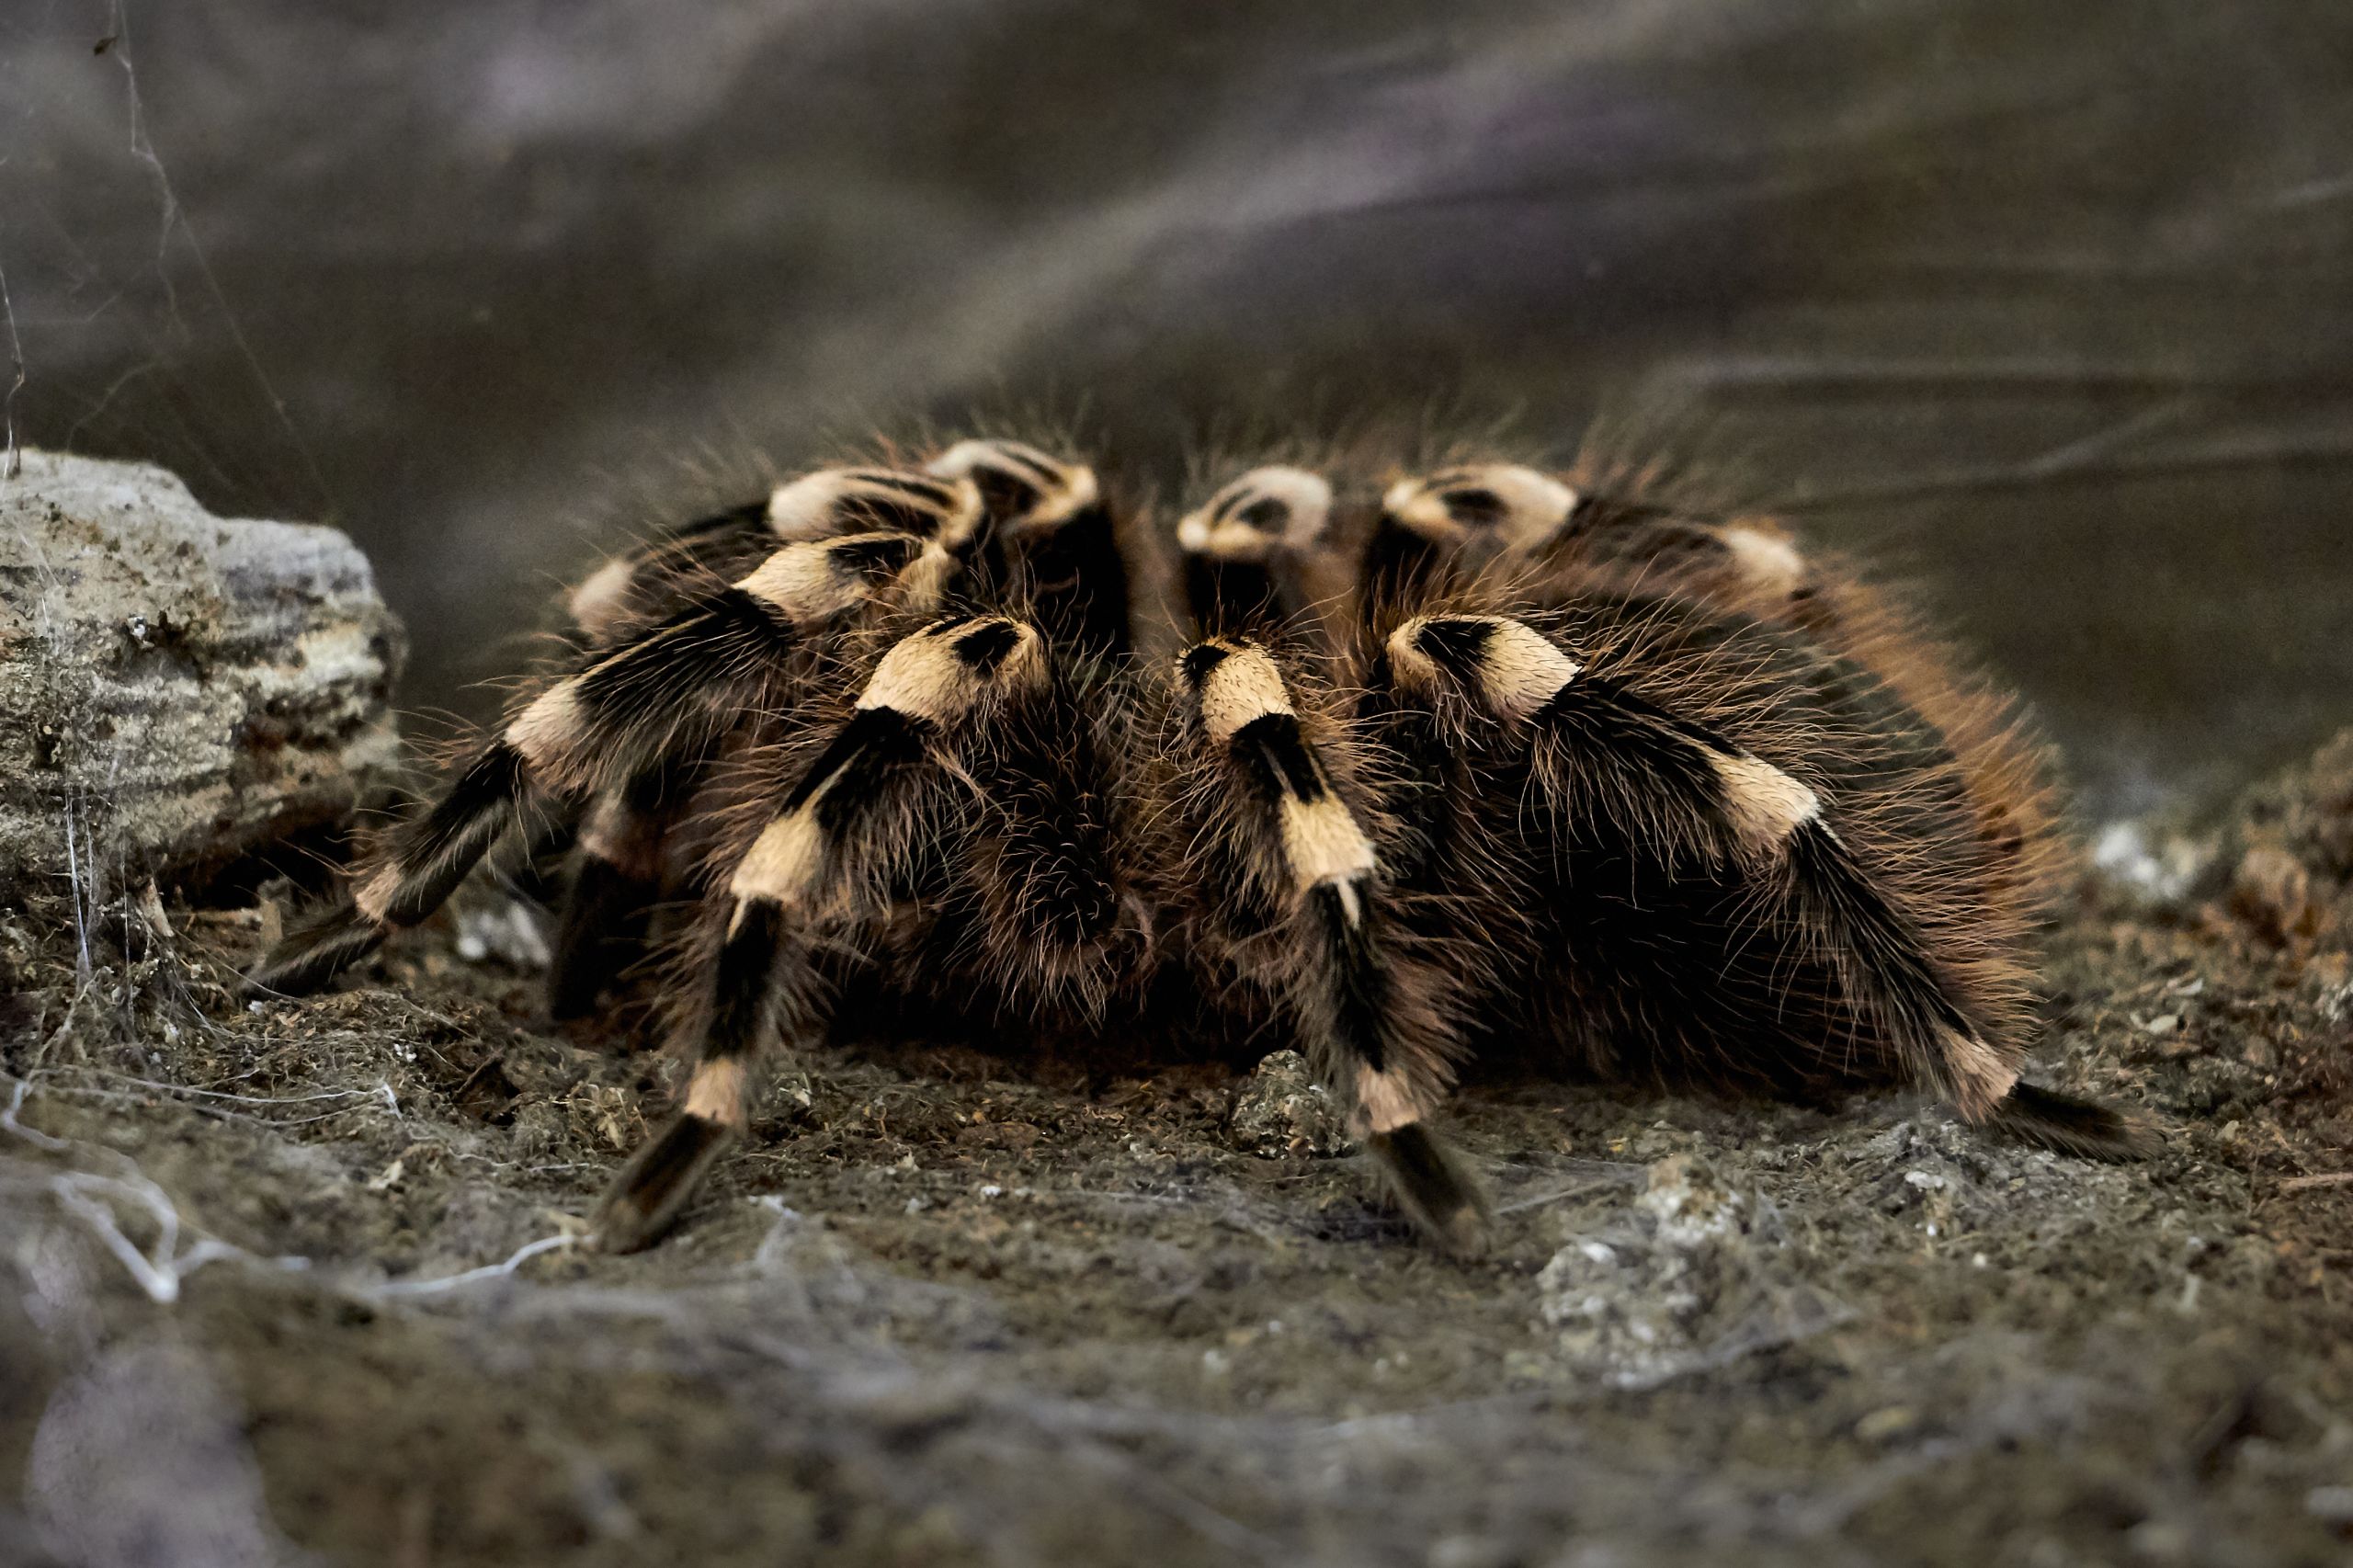 Tarantula spider crawling over dirt and rocks. Image by Oleg Didenko.